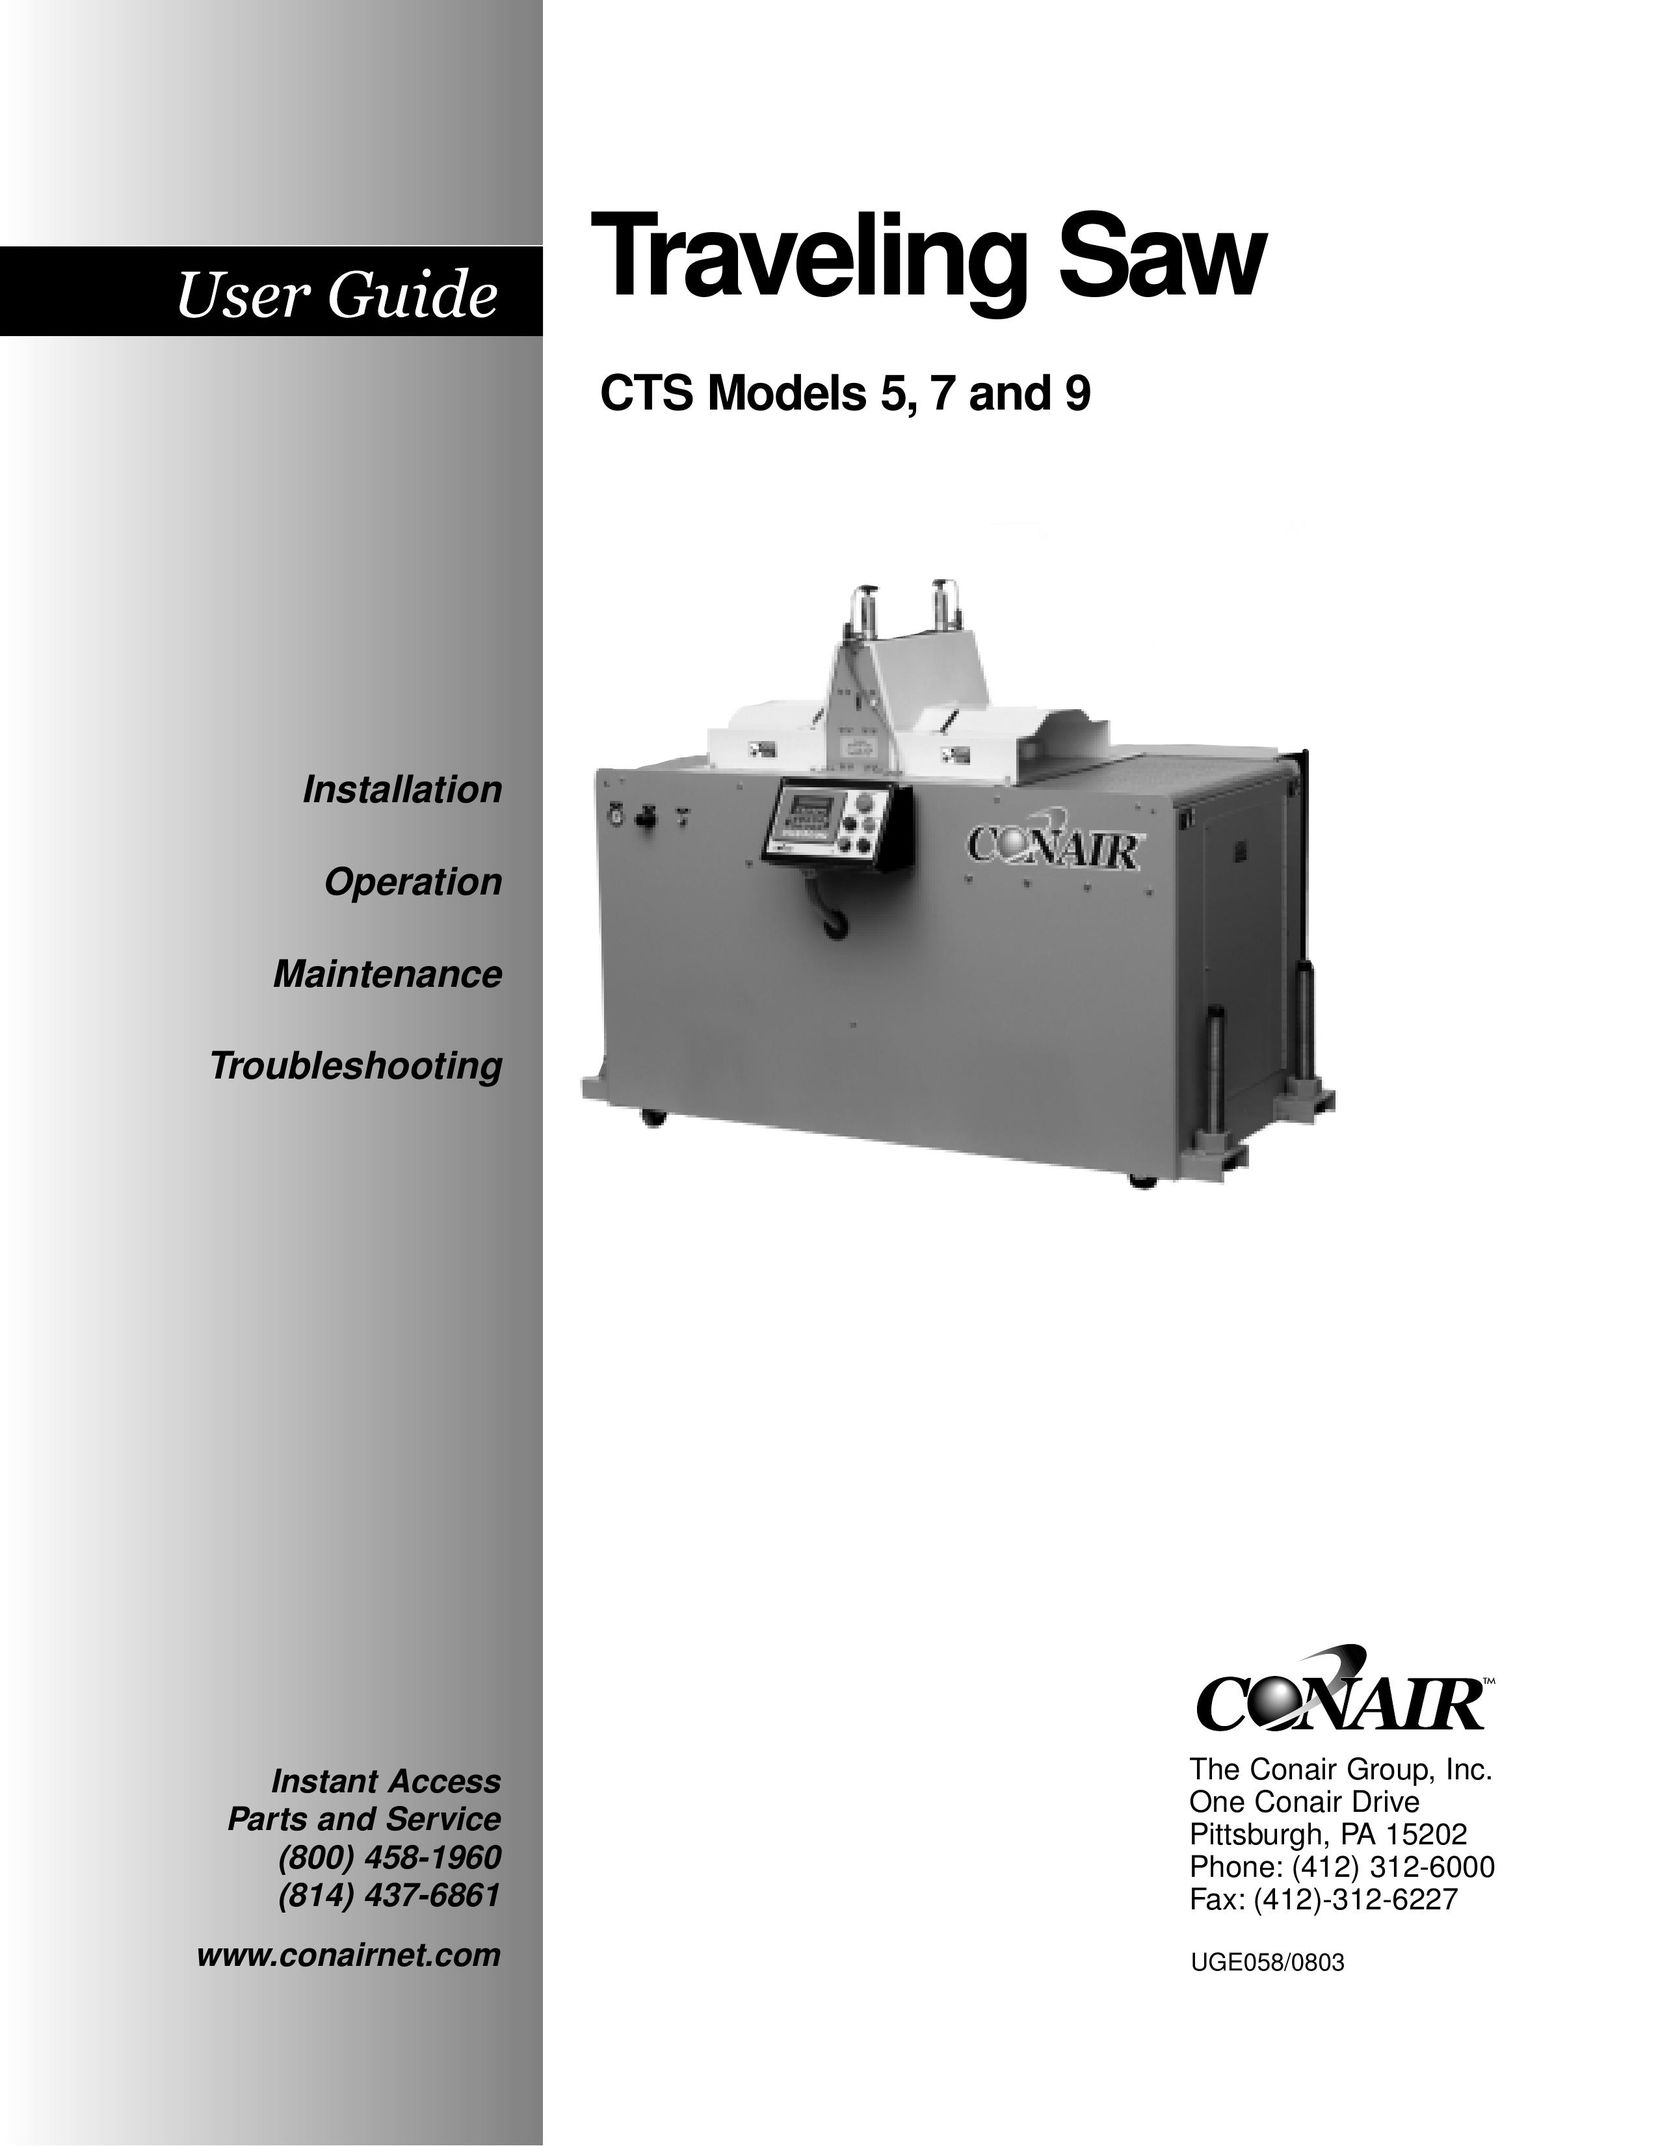 Conair CTS 9 Saw User Manual